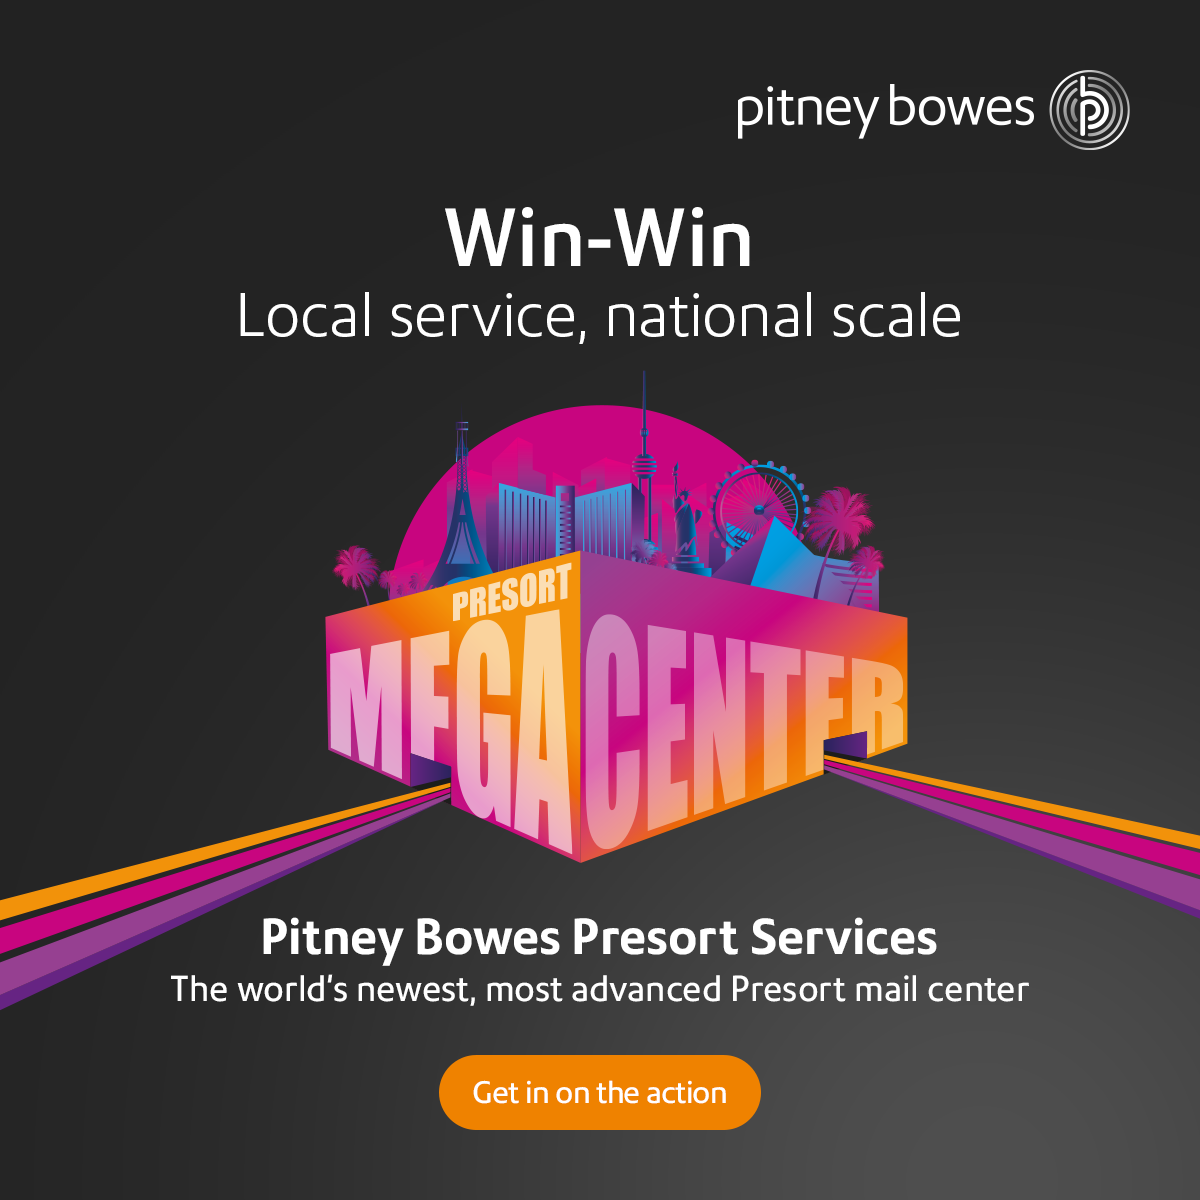 Pitney Bowes Presort Services Las Vegas Mega Center Introductory Campaign - Joseph Ehlinger copywriter